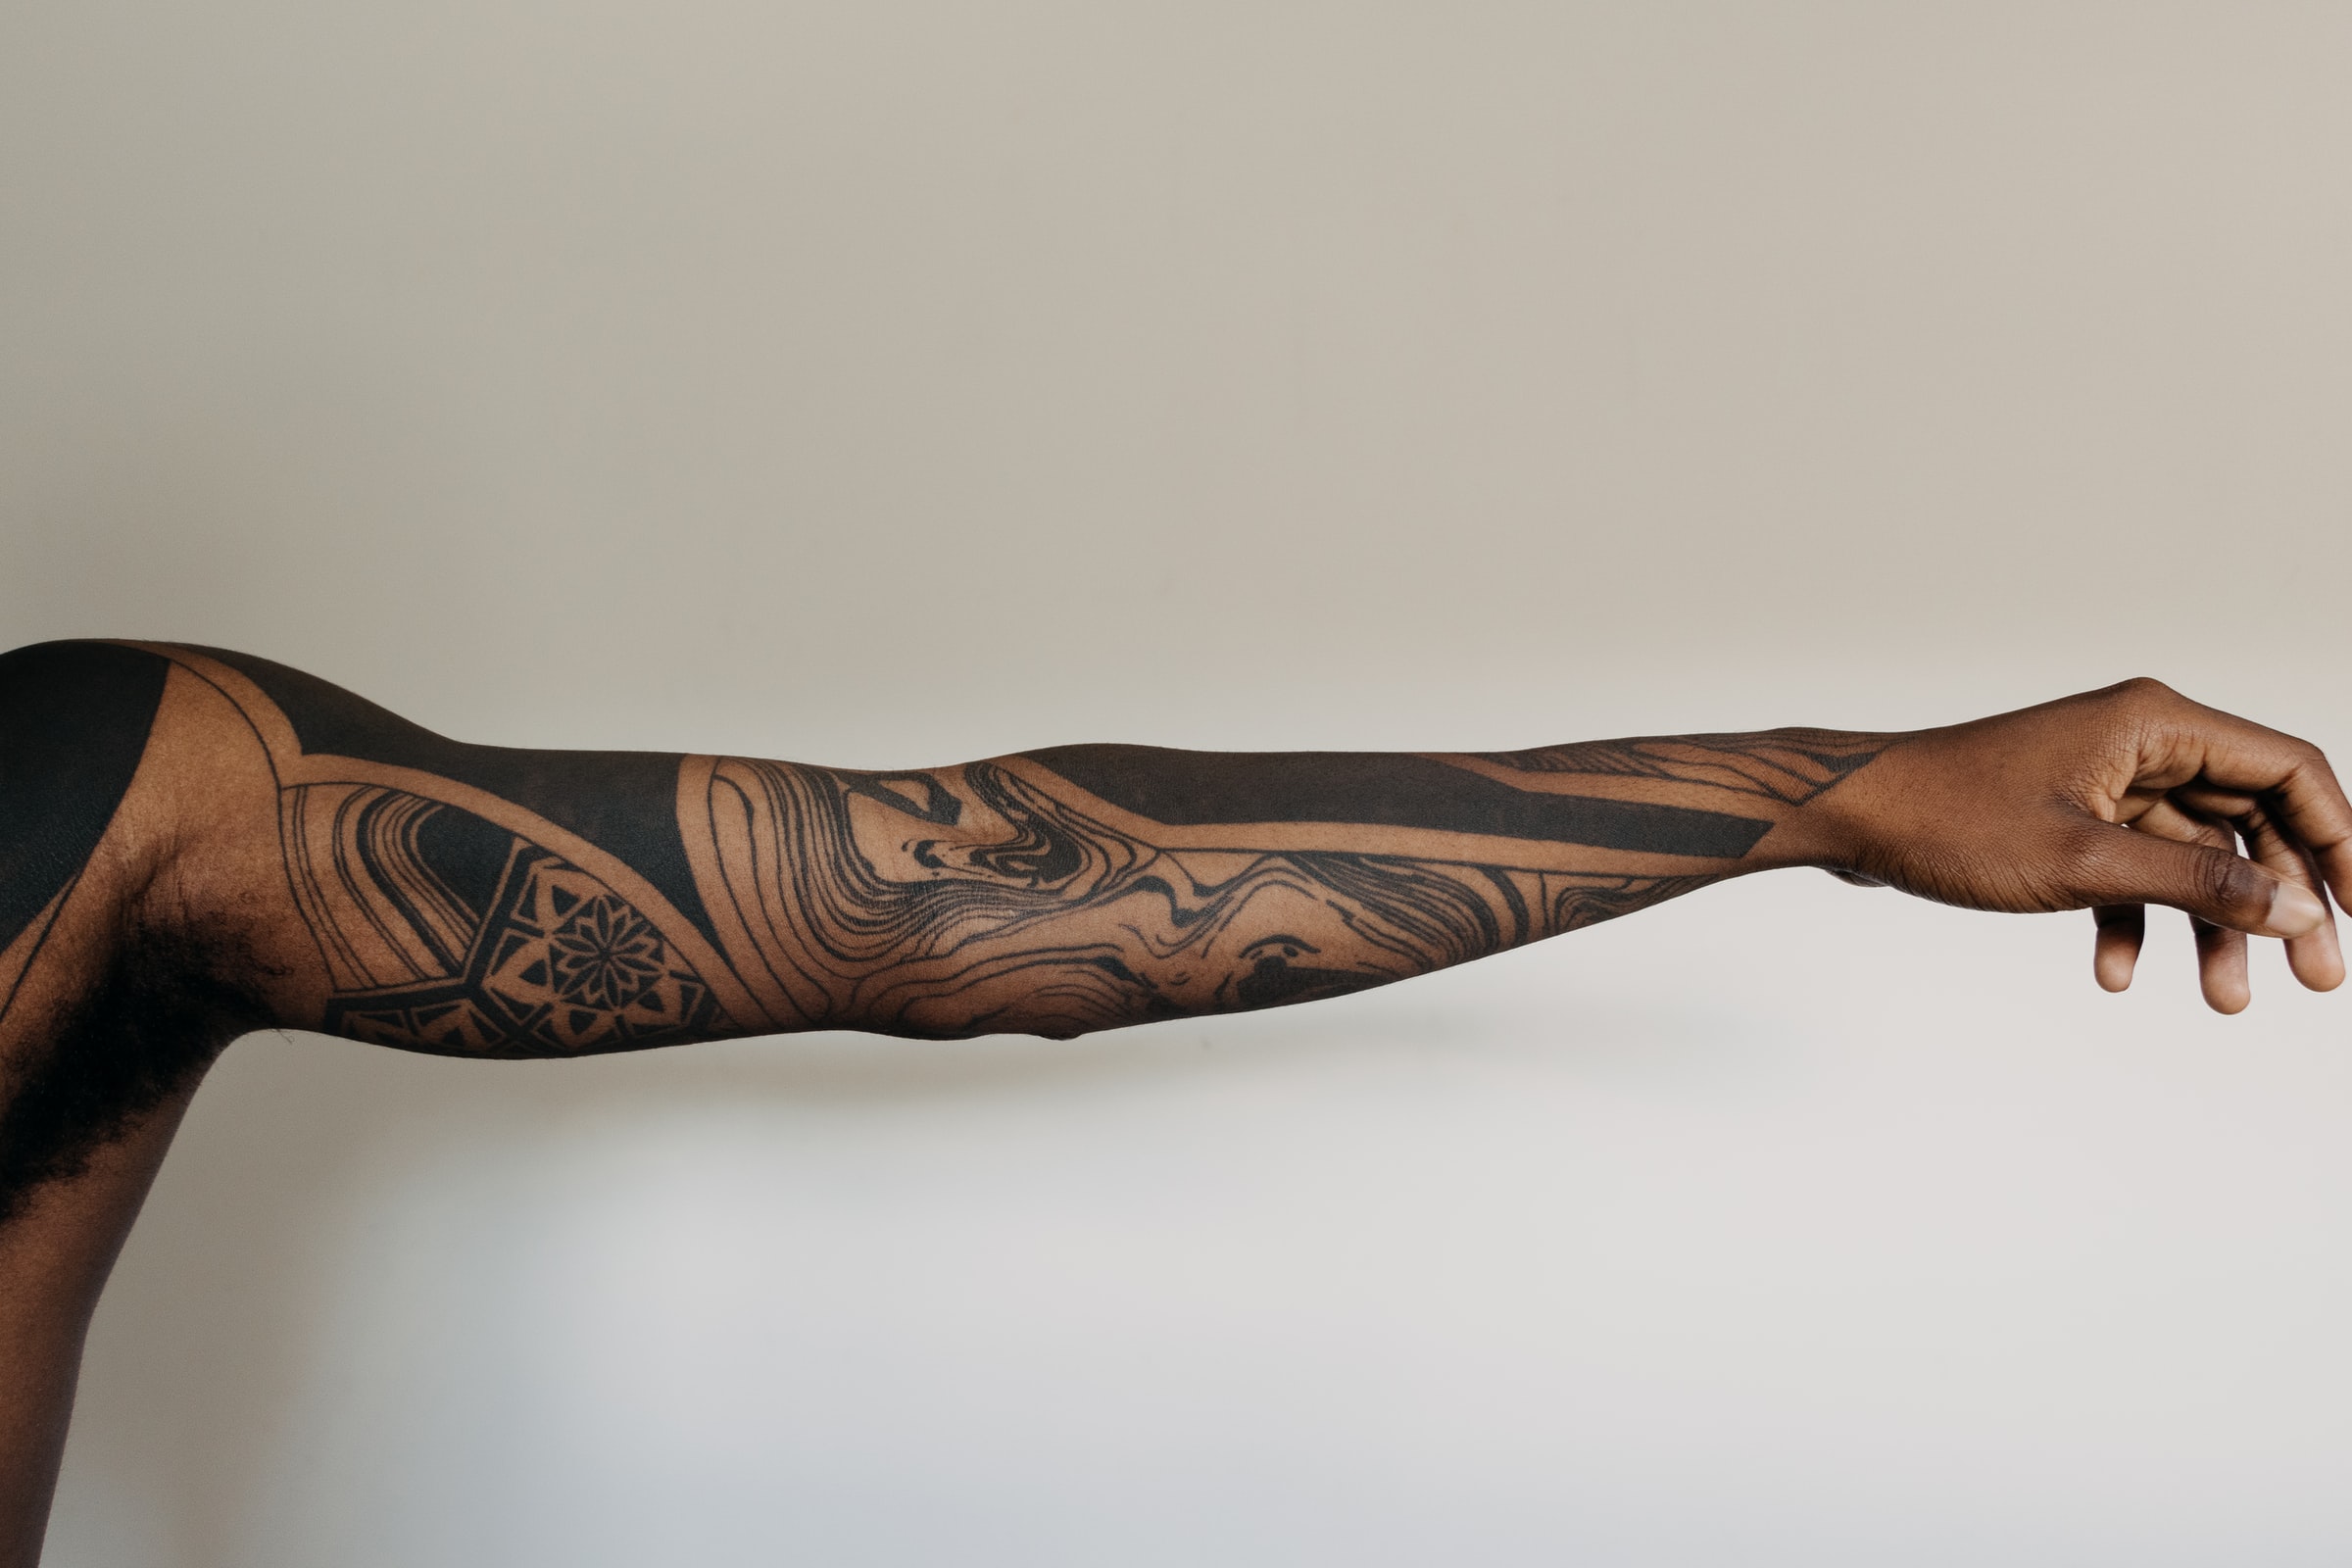 How to make tattoo more darker